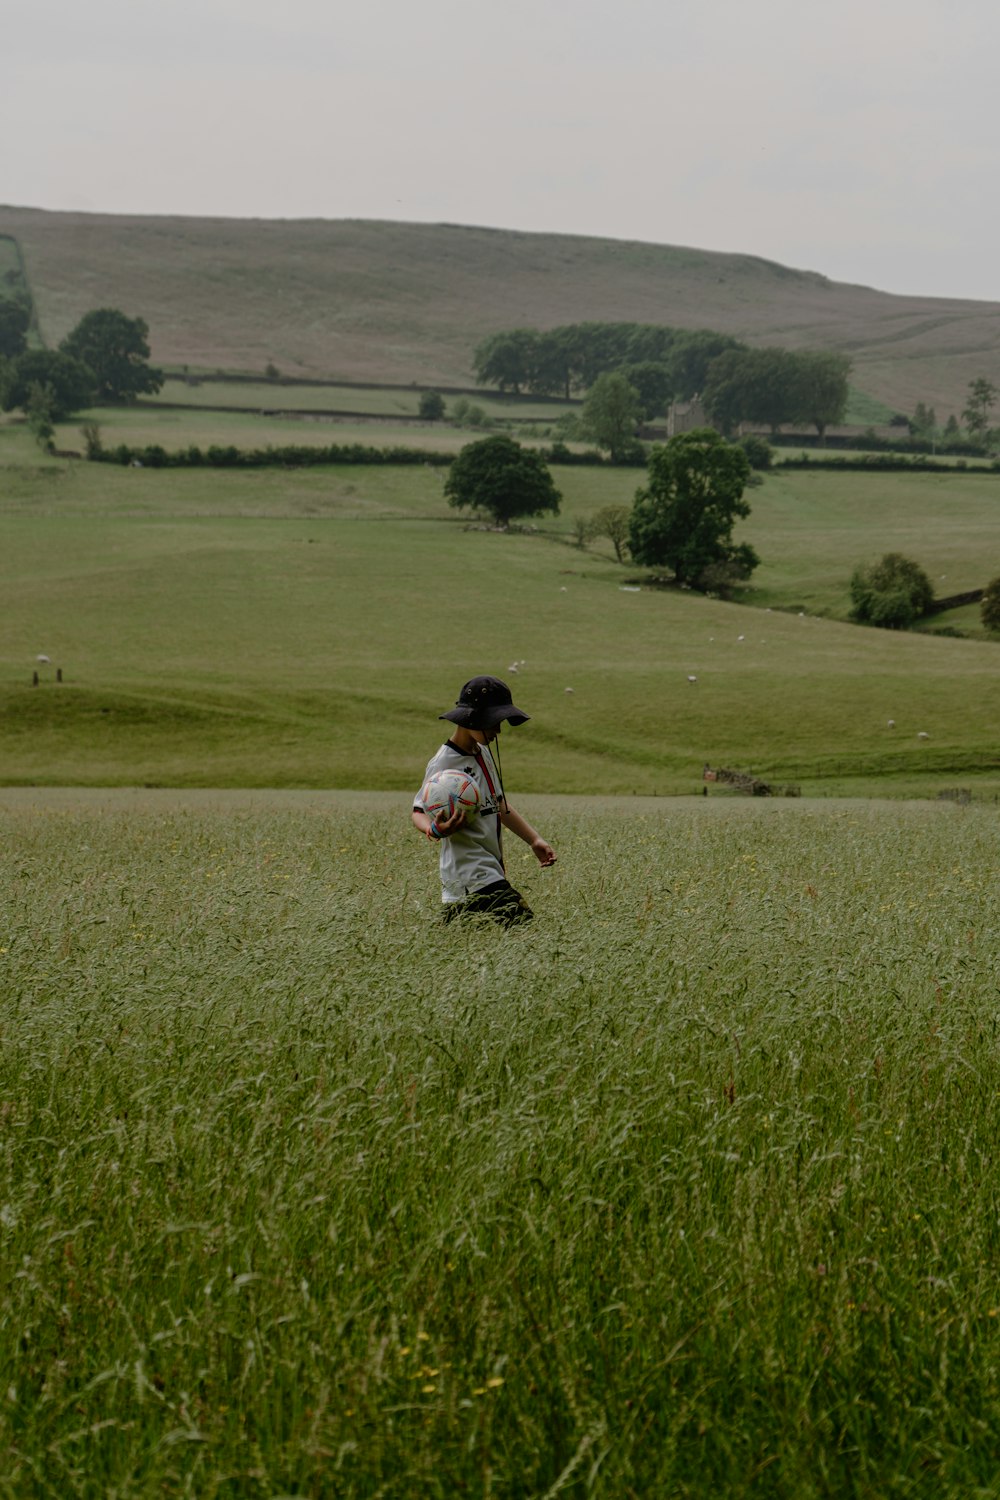 a person walking through a field of grass